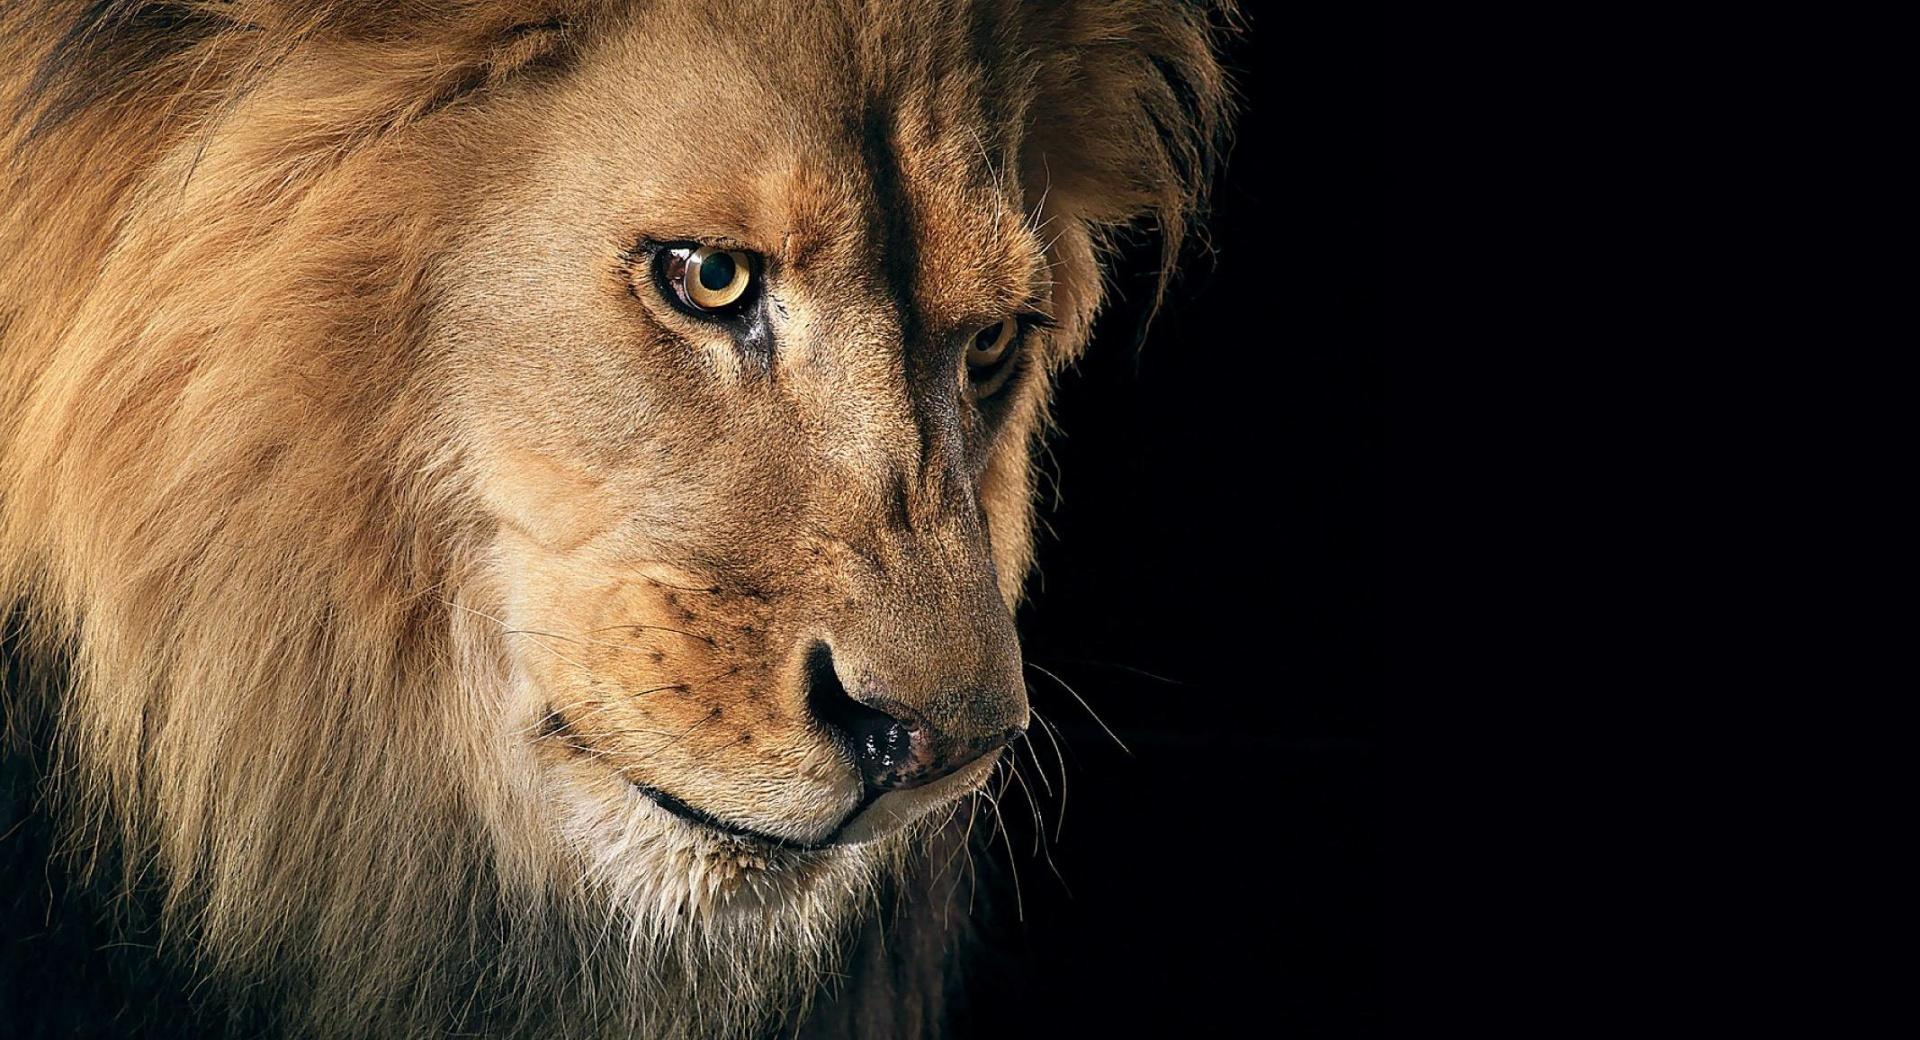 Beautiful Lion Portrait wallpapers HD quality